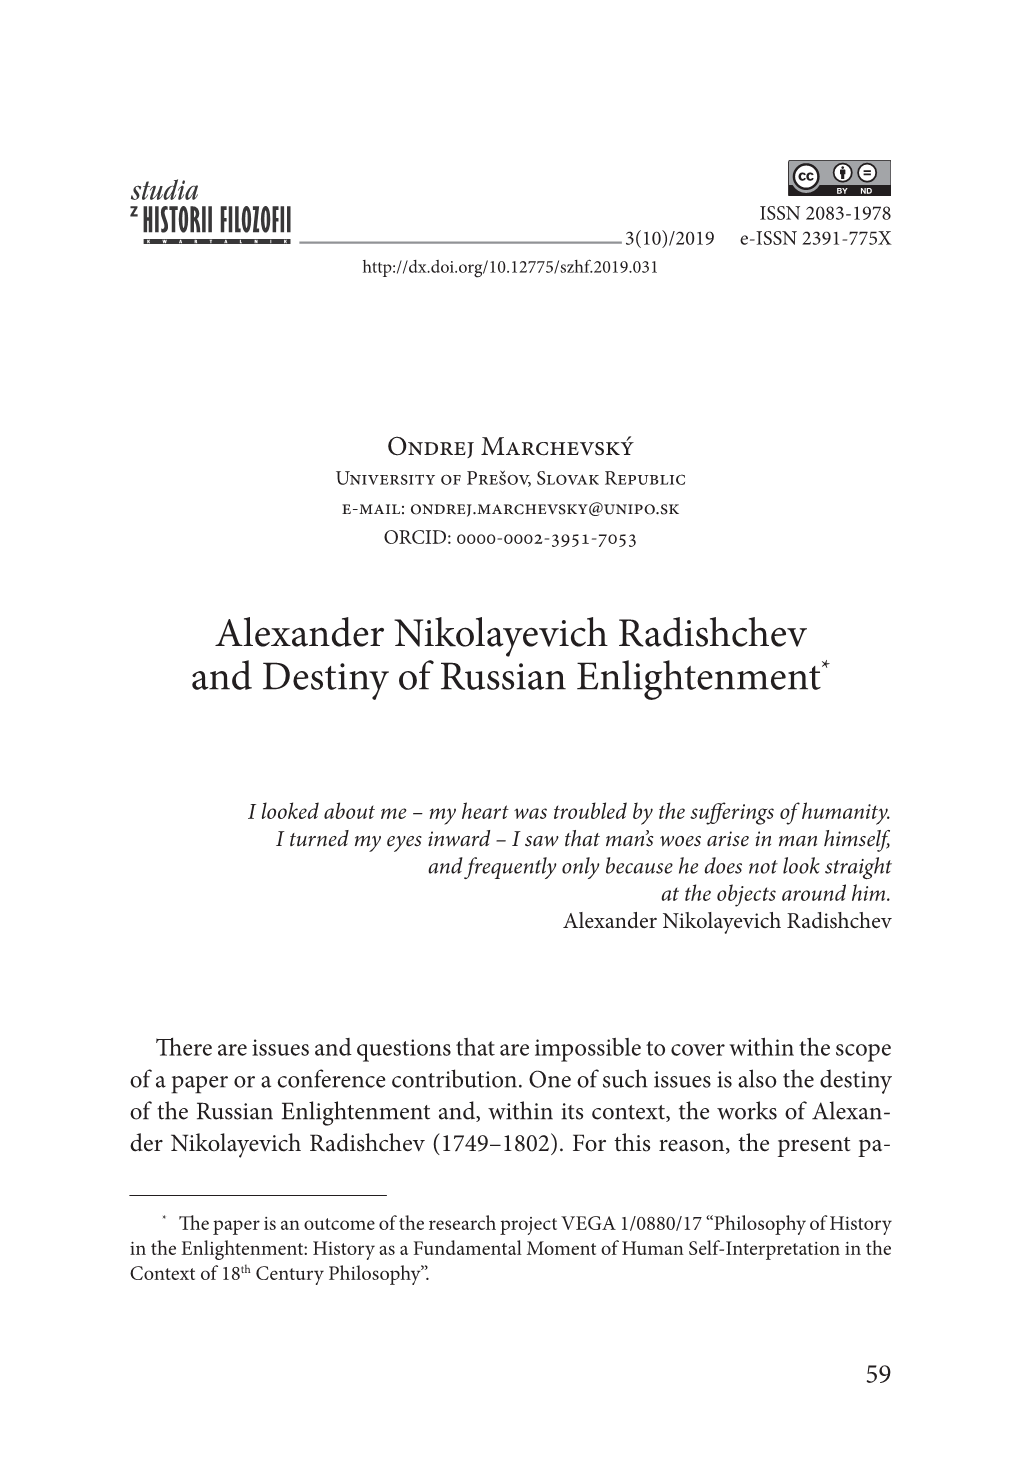 Alexander Nikolayevich Radishchev and Destiny of Russian Enlightenment*